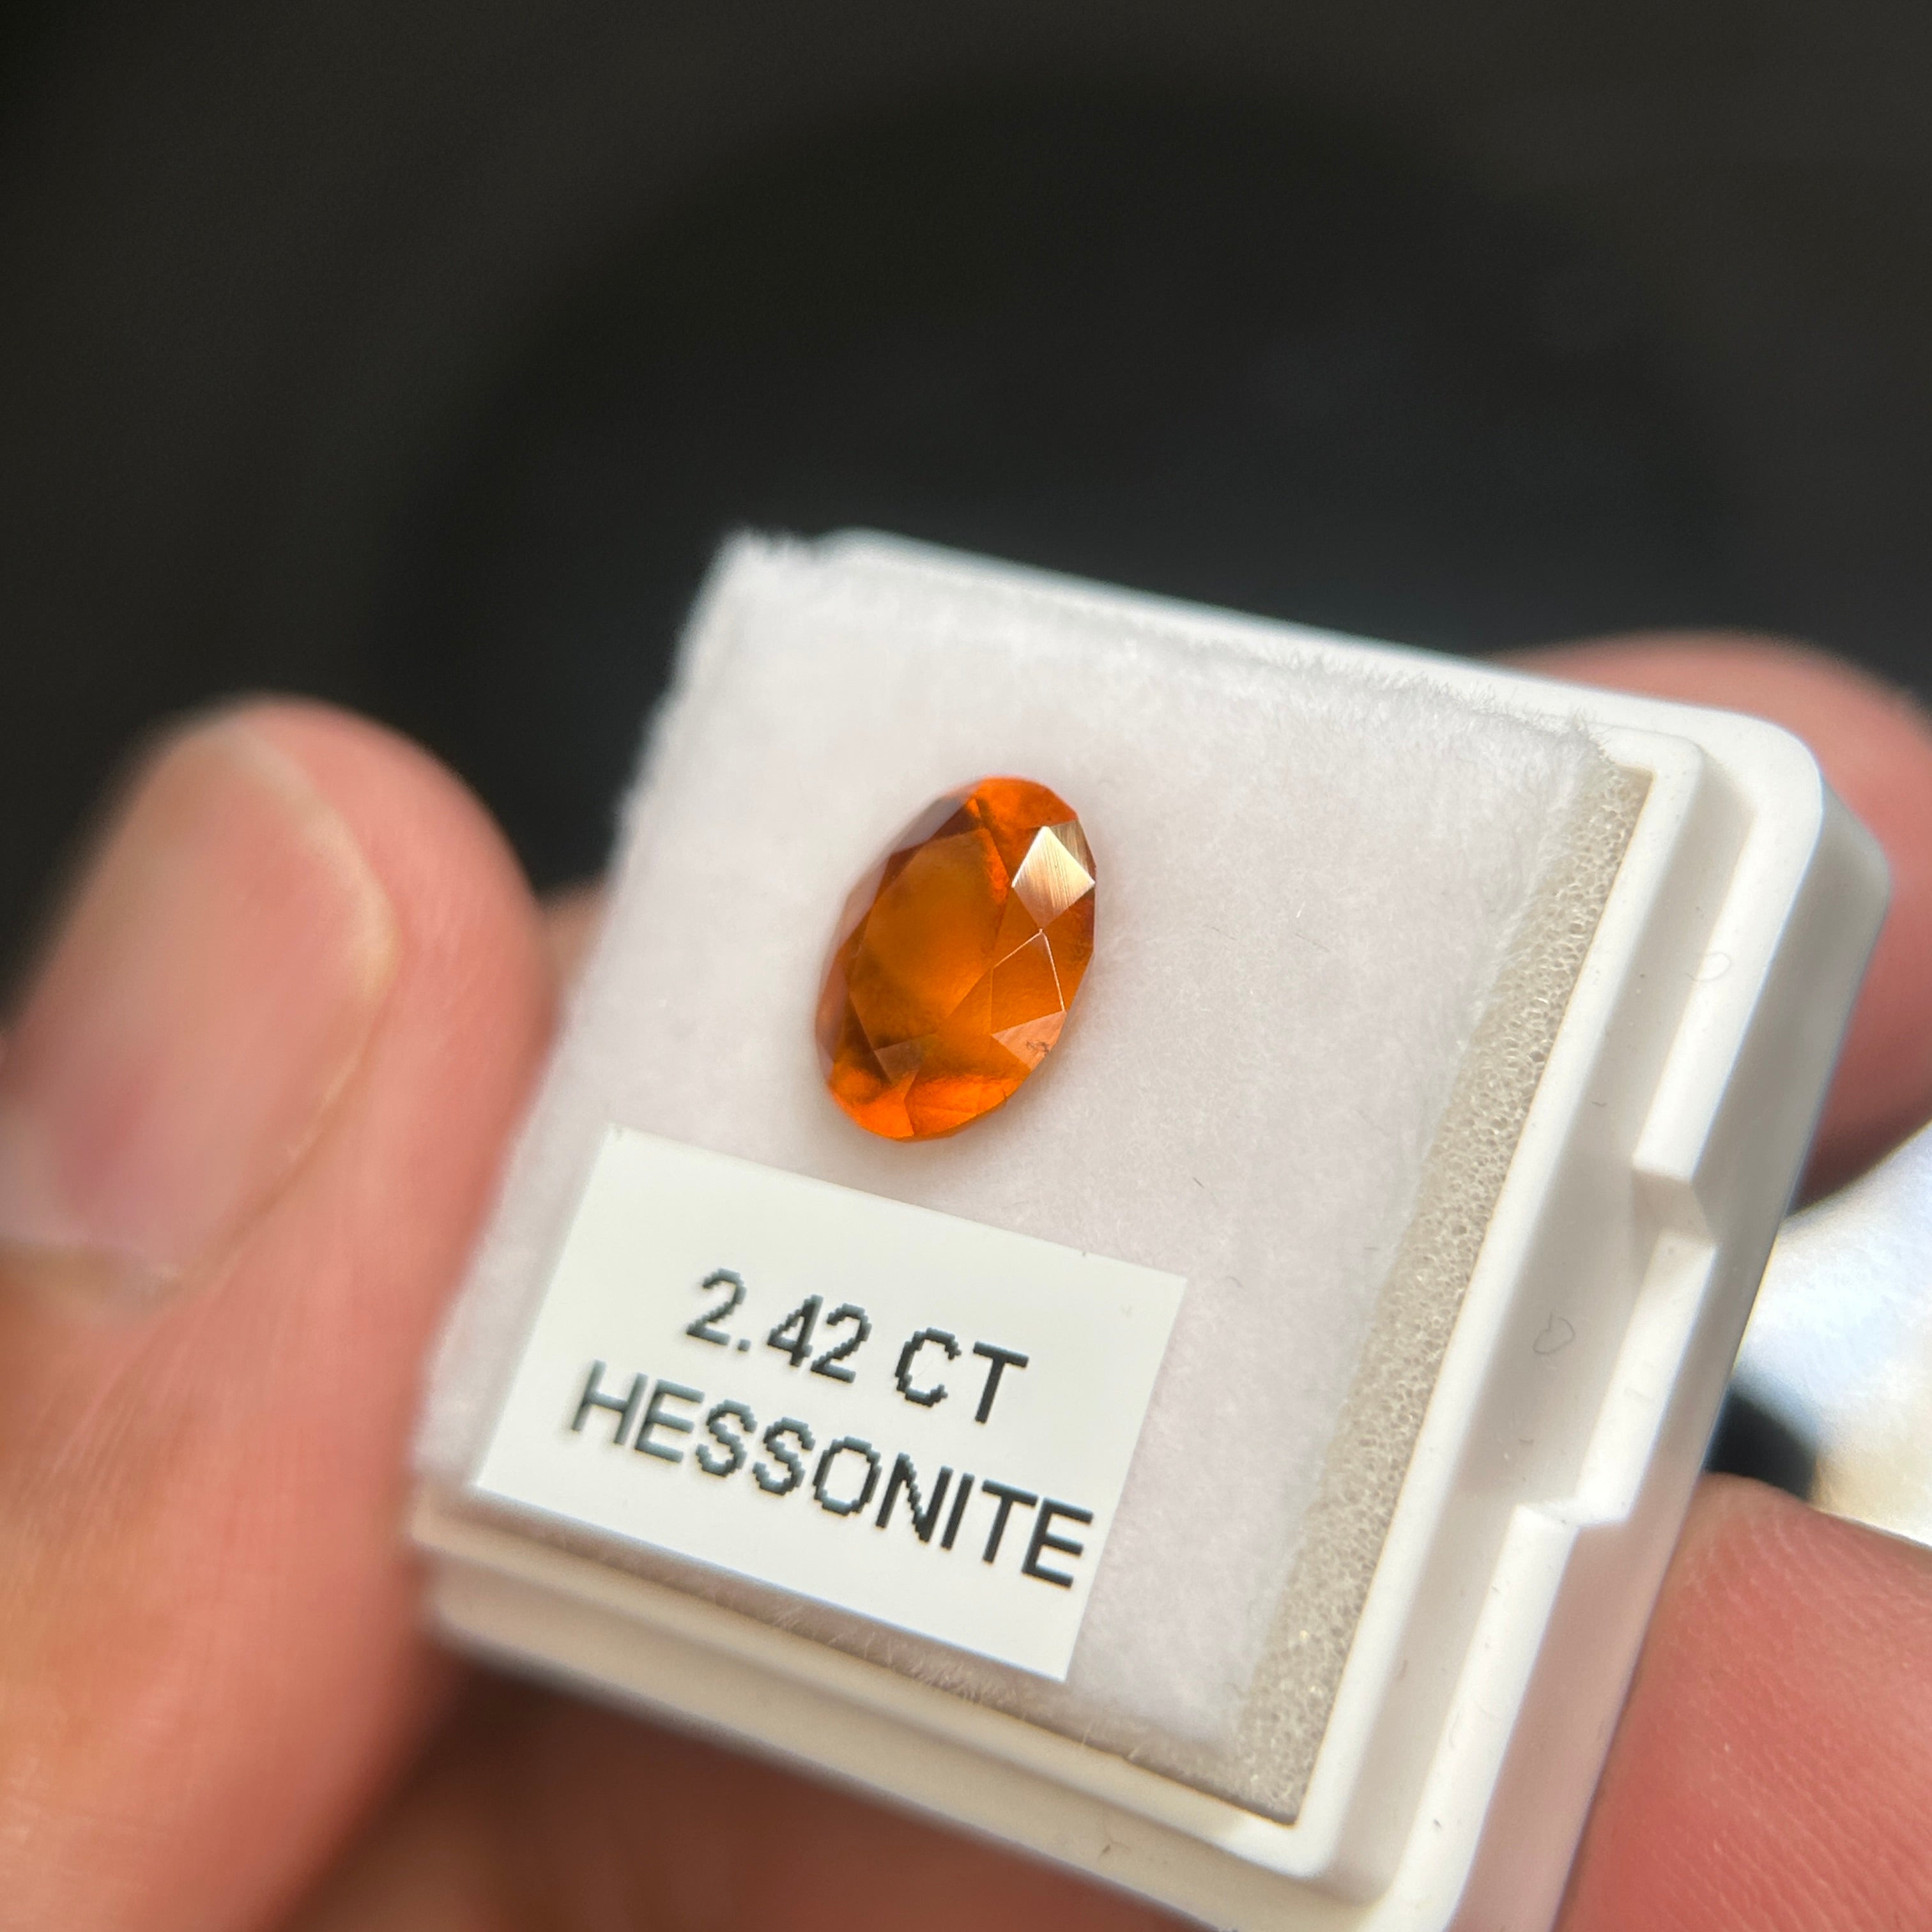 2.42ct Hessonite, Tanzania, Untreated Unheated